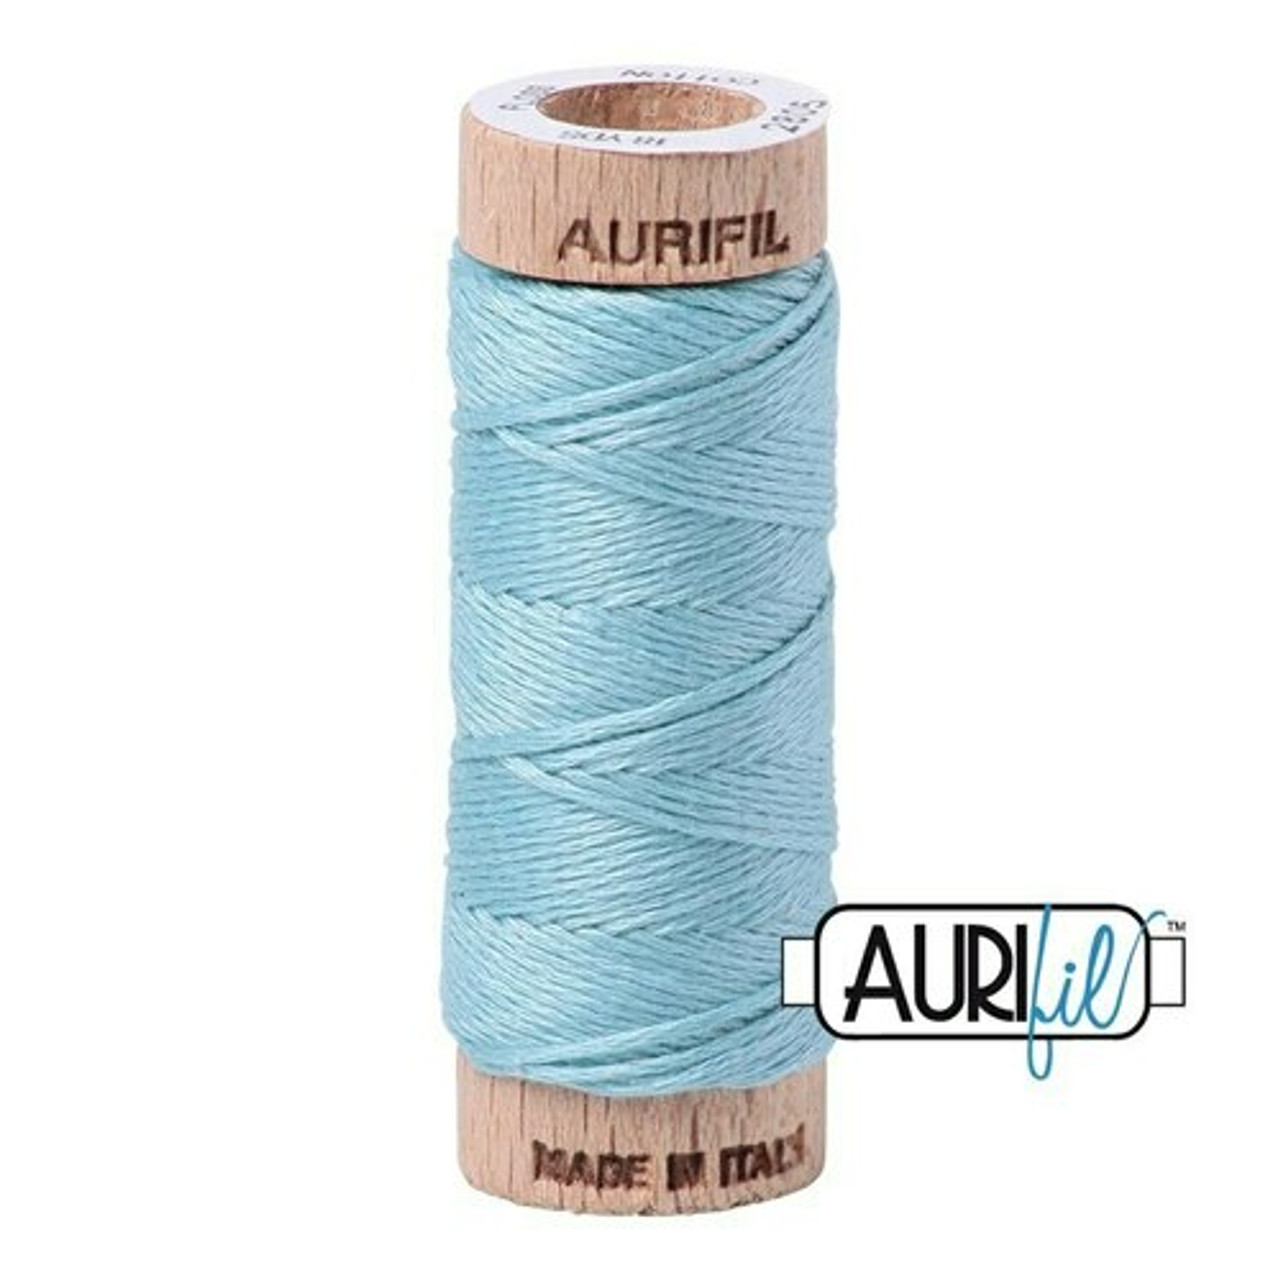 Aurifil 2805 - Light Grey Turquoise